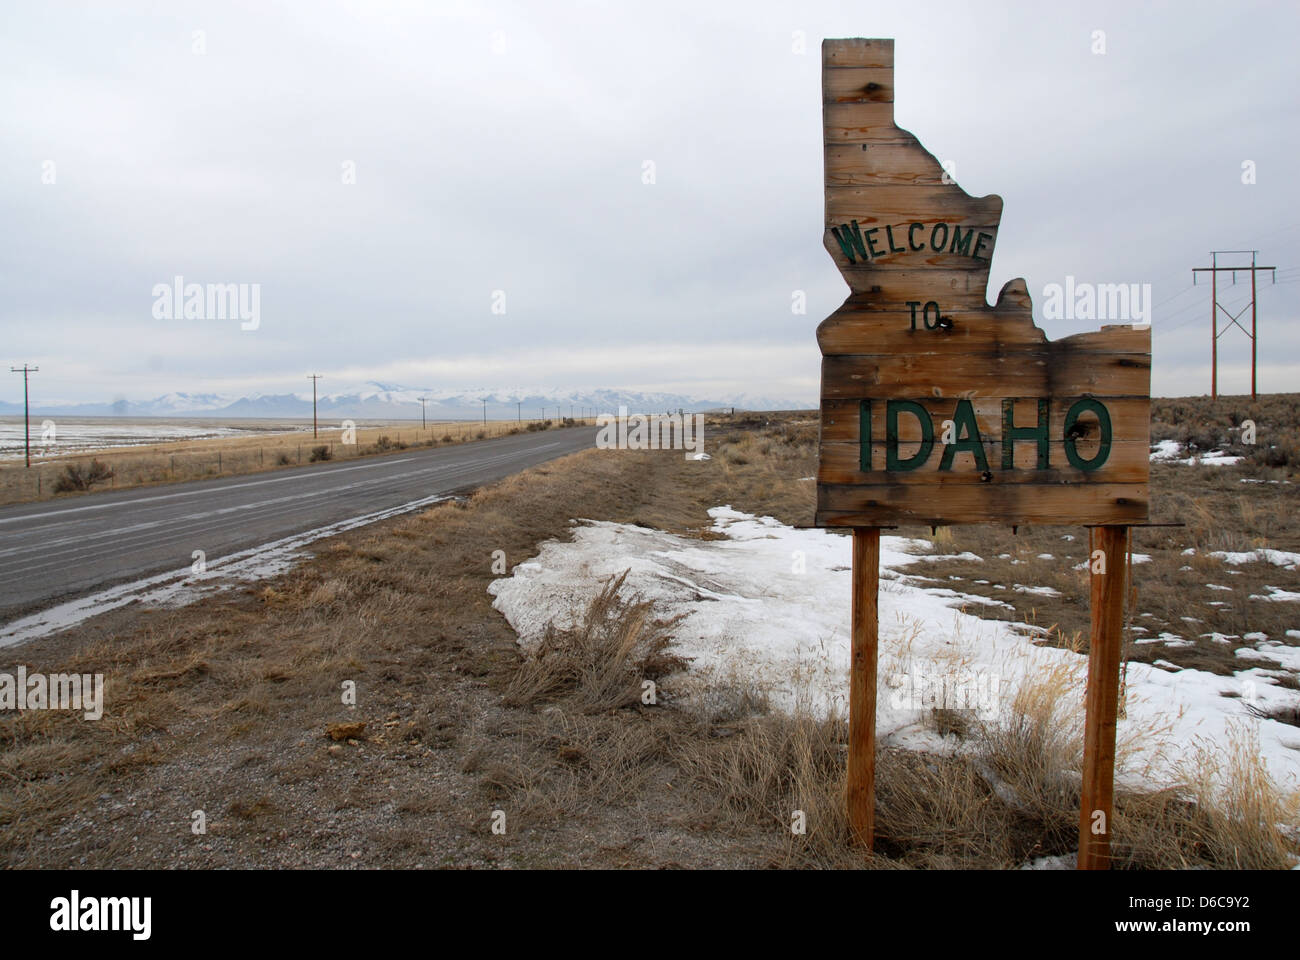 Welcome to Idaho highway sign, ranchland, Idaho Stock Photo